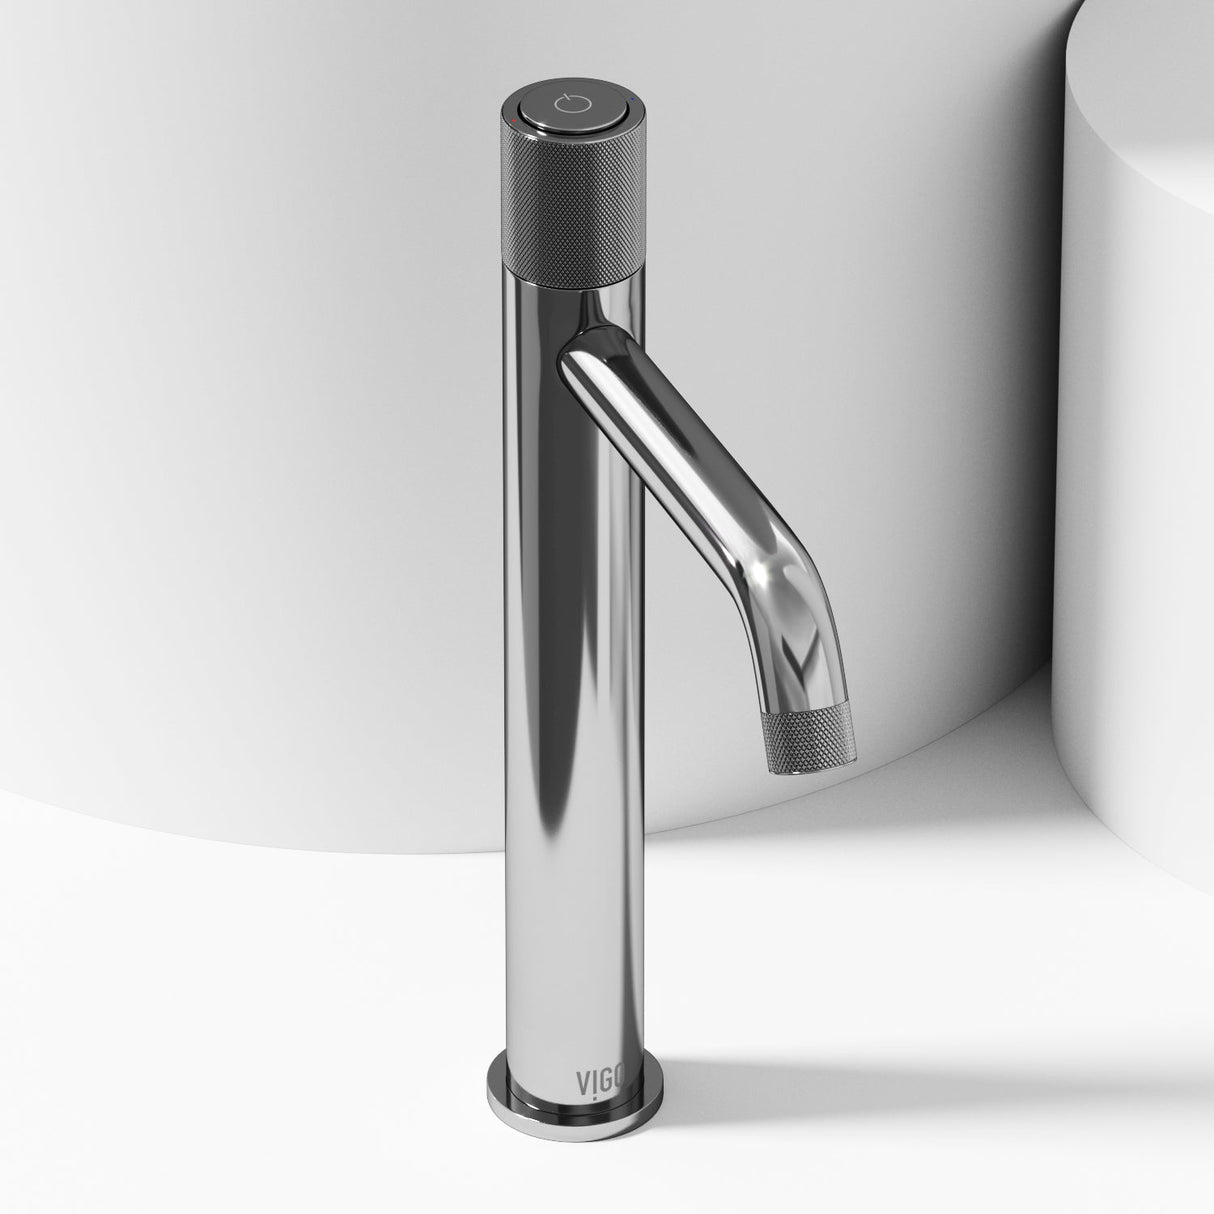 VIGO Apollo Vessel Bathroom Faucet in Chrome VG03031CH